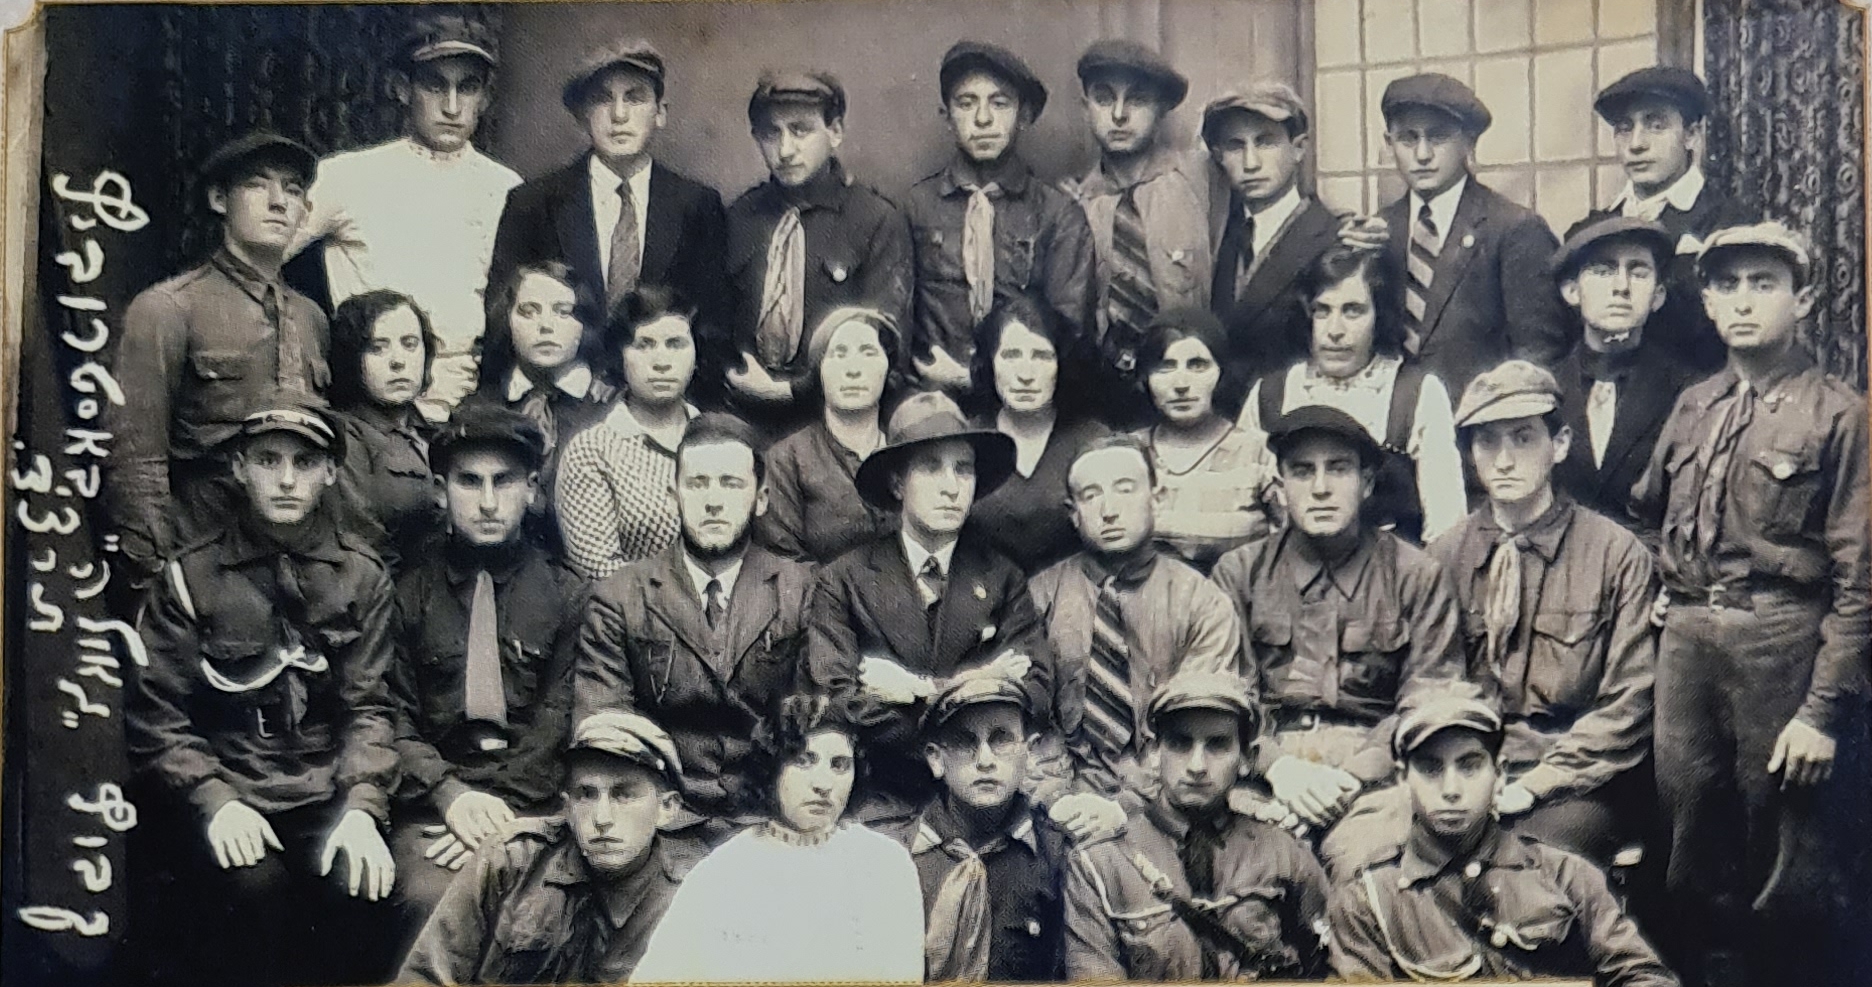 Kibbutz Geula Ostrowiec, Y Ereli seated 2nd from left